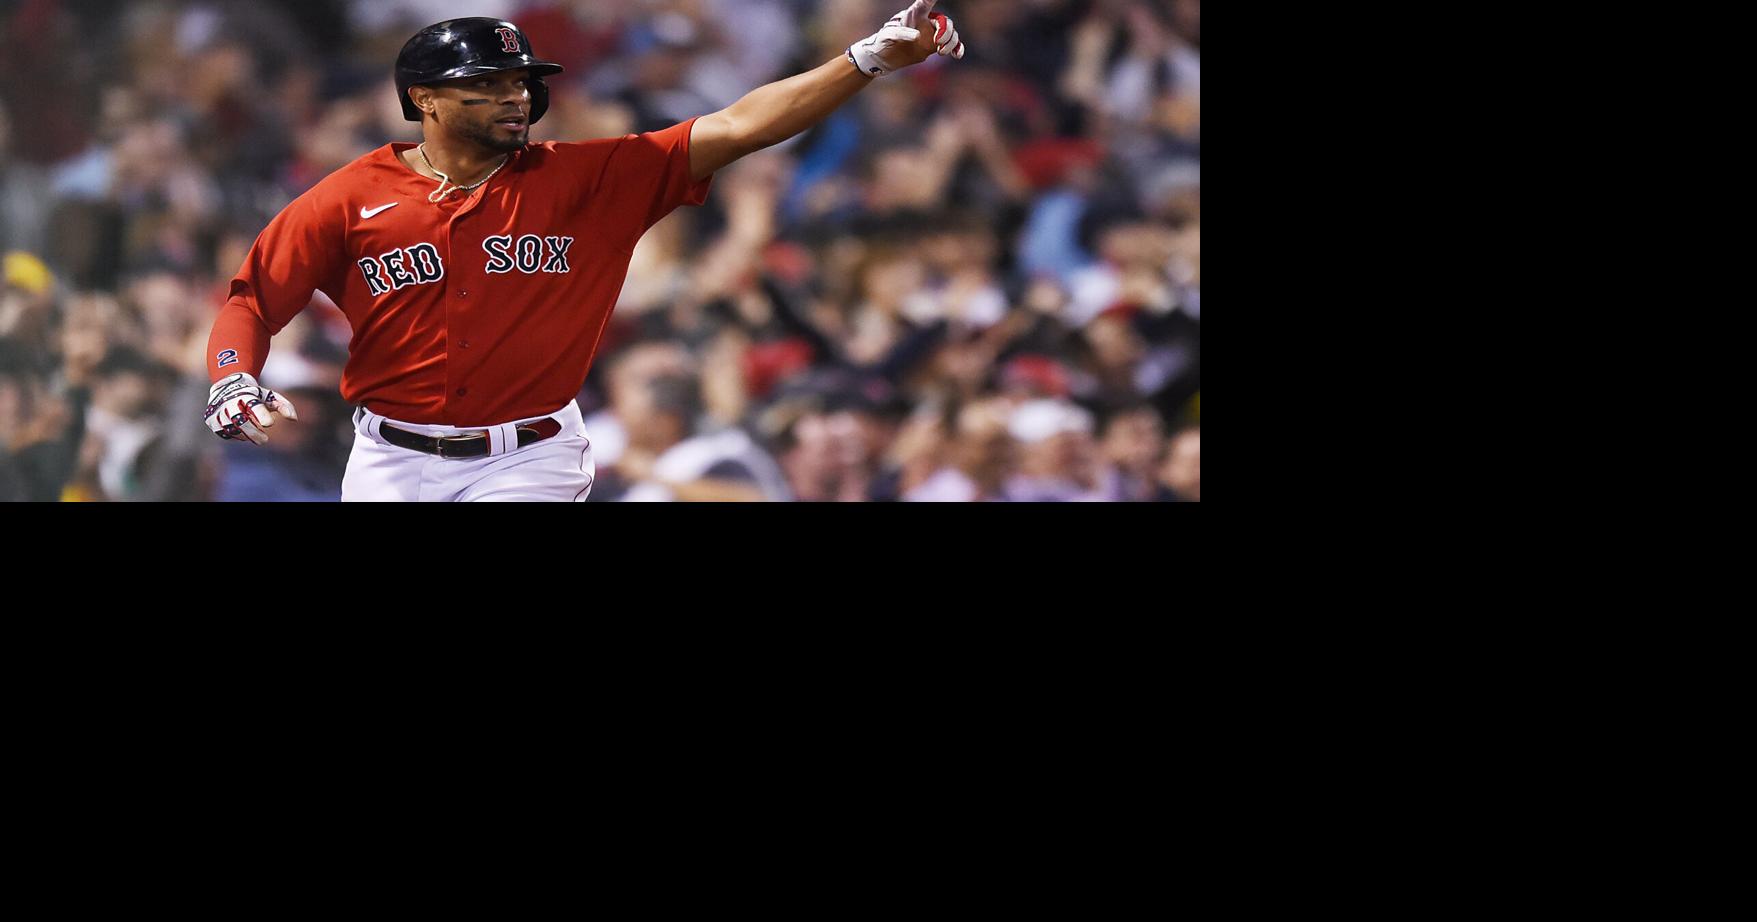 Manny Ramirez Boston Red Sox Editorial Photo - Image of trot